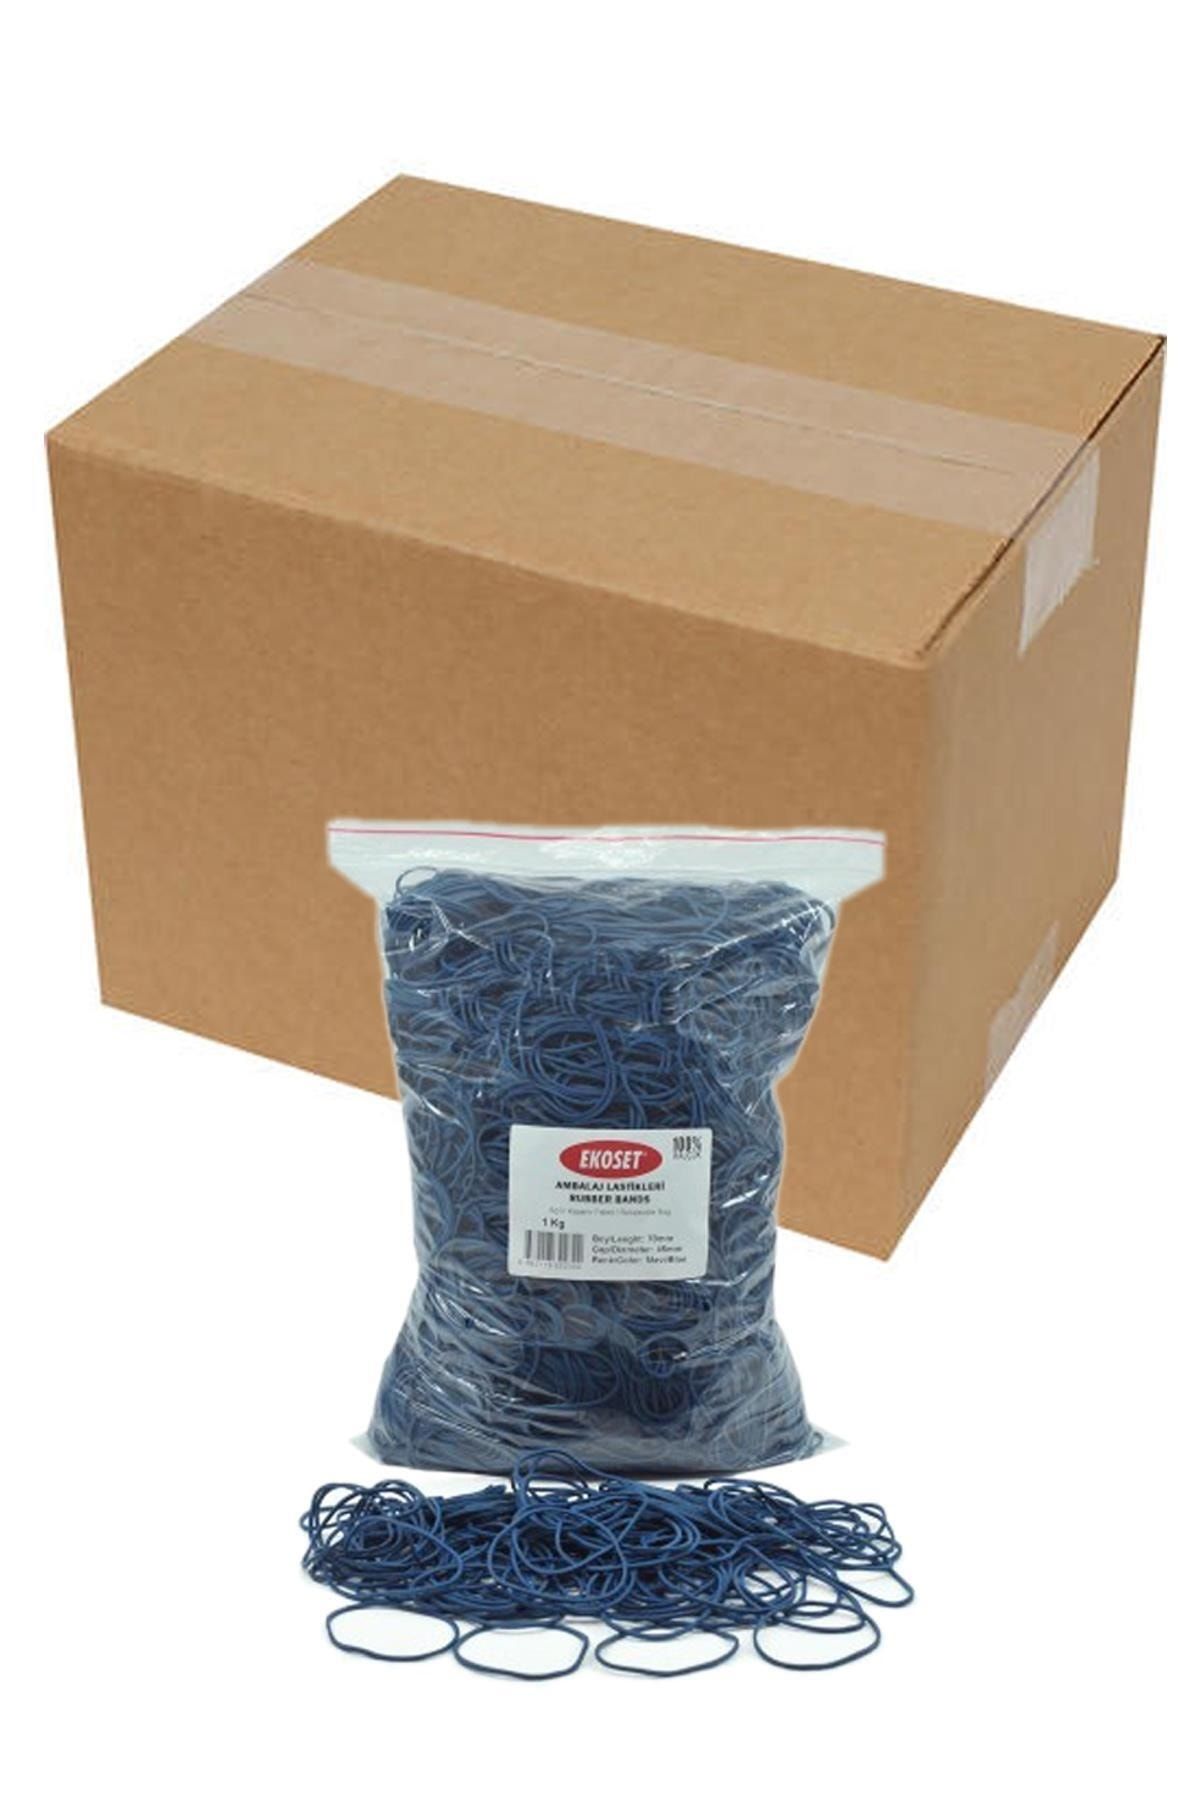 ekoset 70mm Mavi Renkli Kauçuk Paket Ambalaj Lastiği 12kg Koli